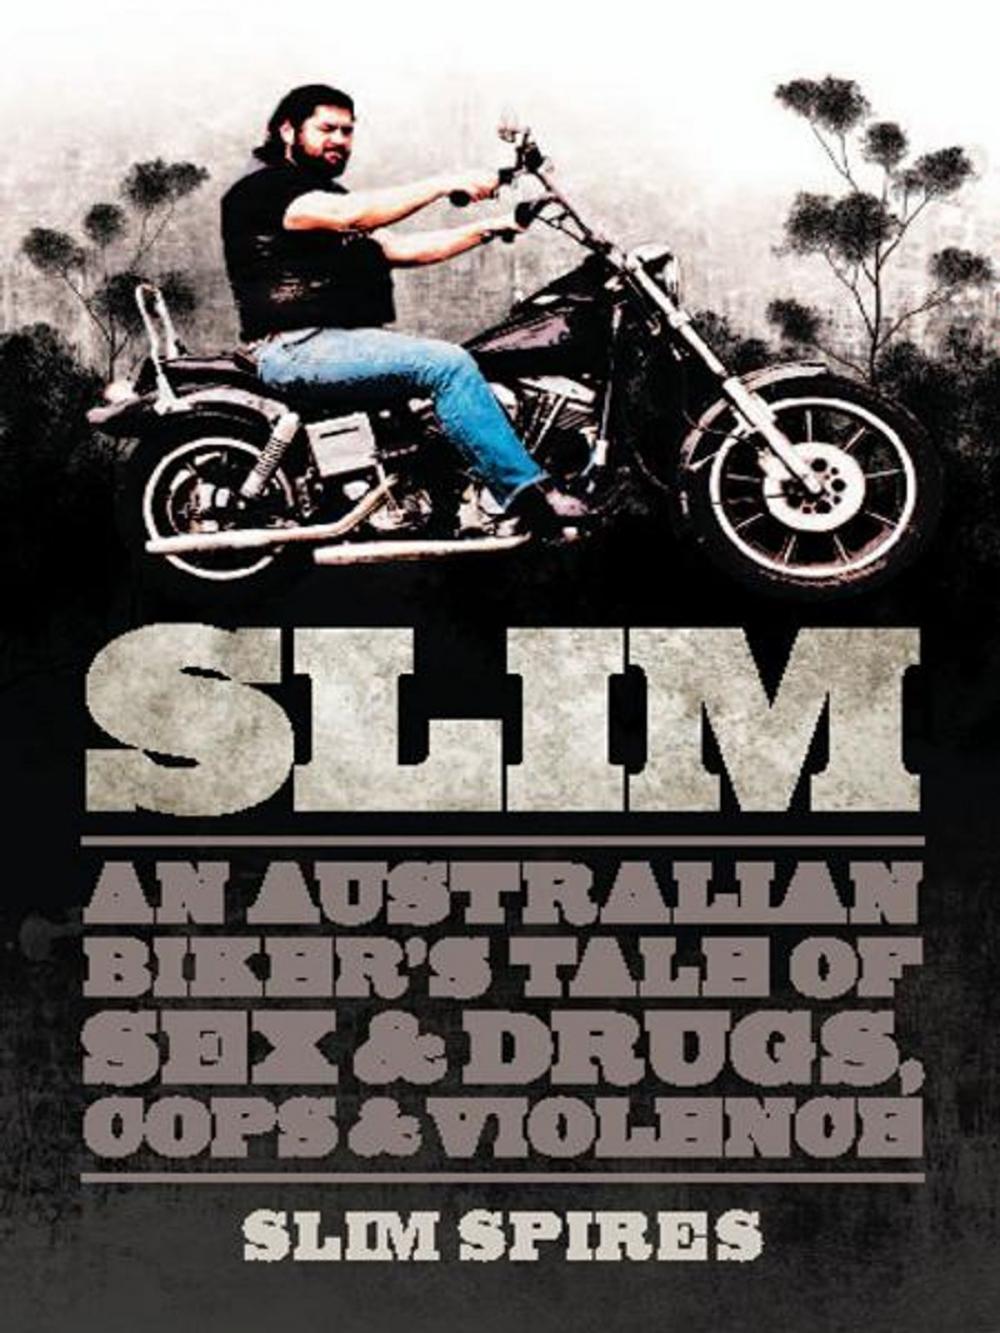 Big bigCover of Slim: An Australian Biker's Tale of Sex & Drugs, Cops & Violence